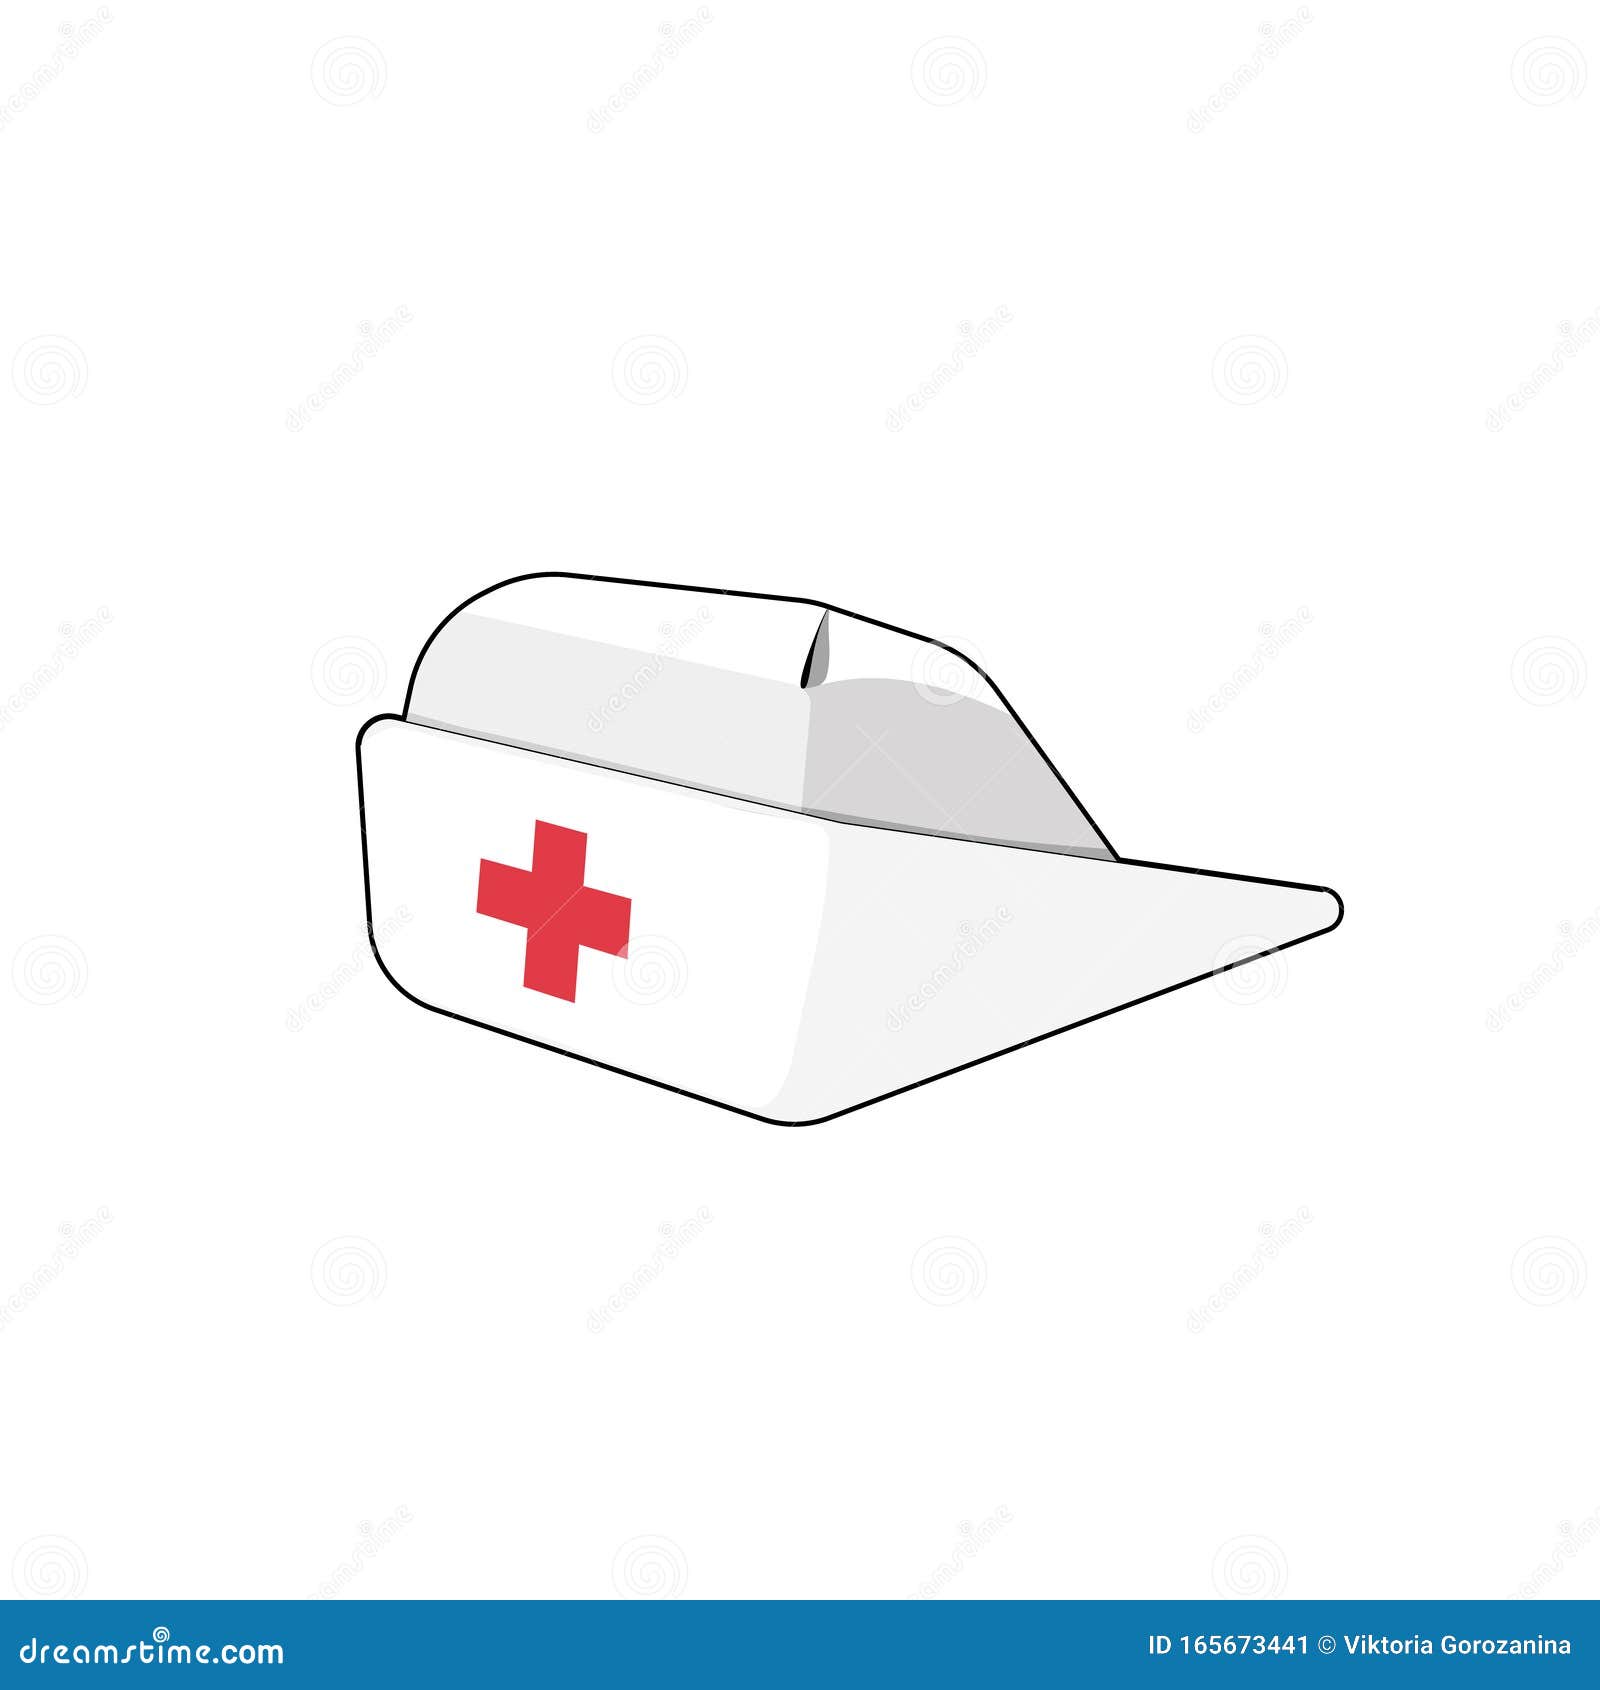 Nurse's Cap with Red Cross Insignia